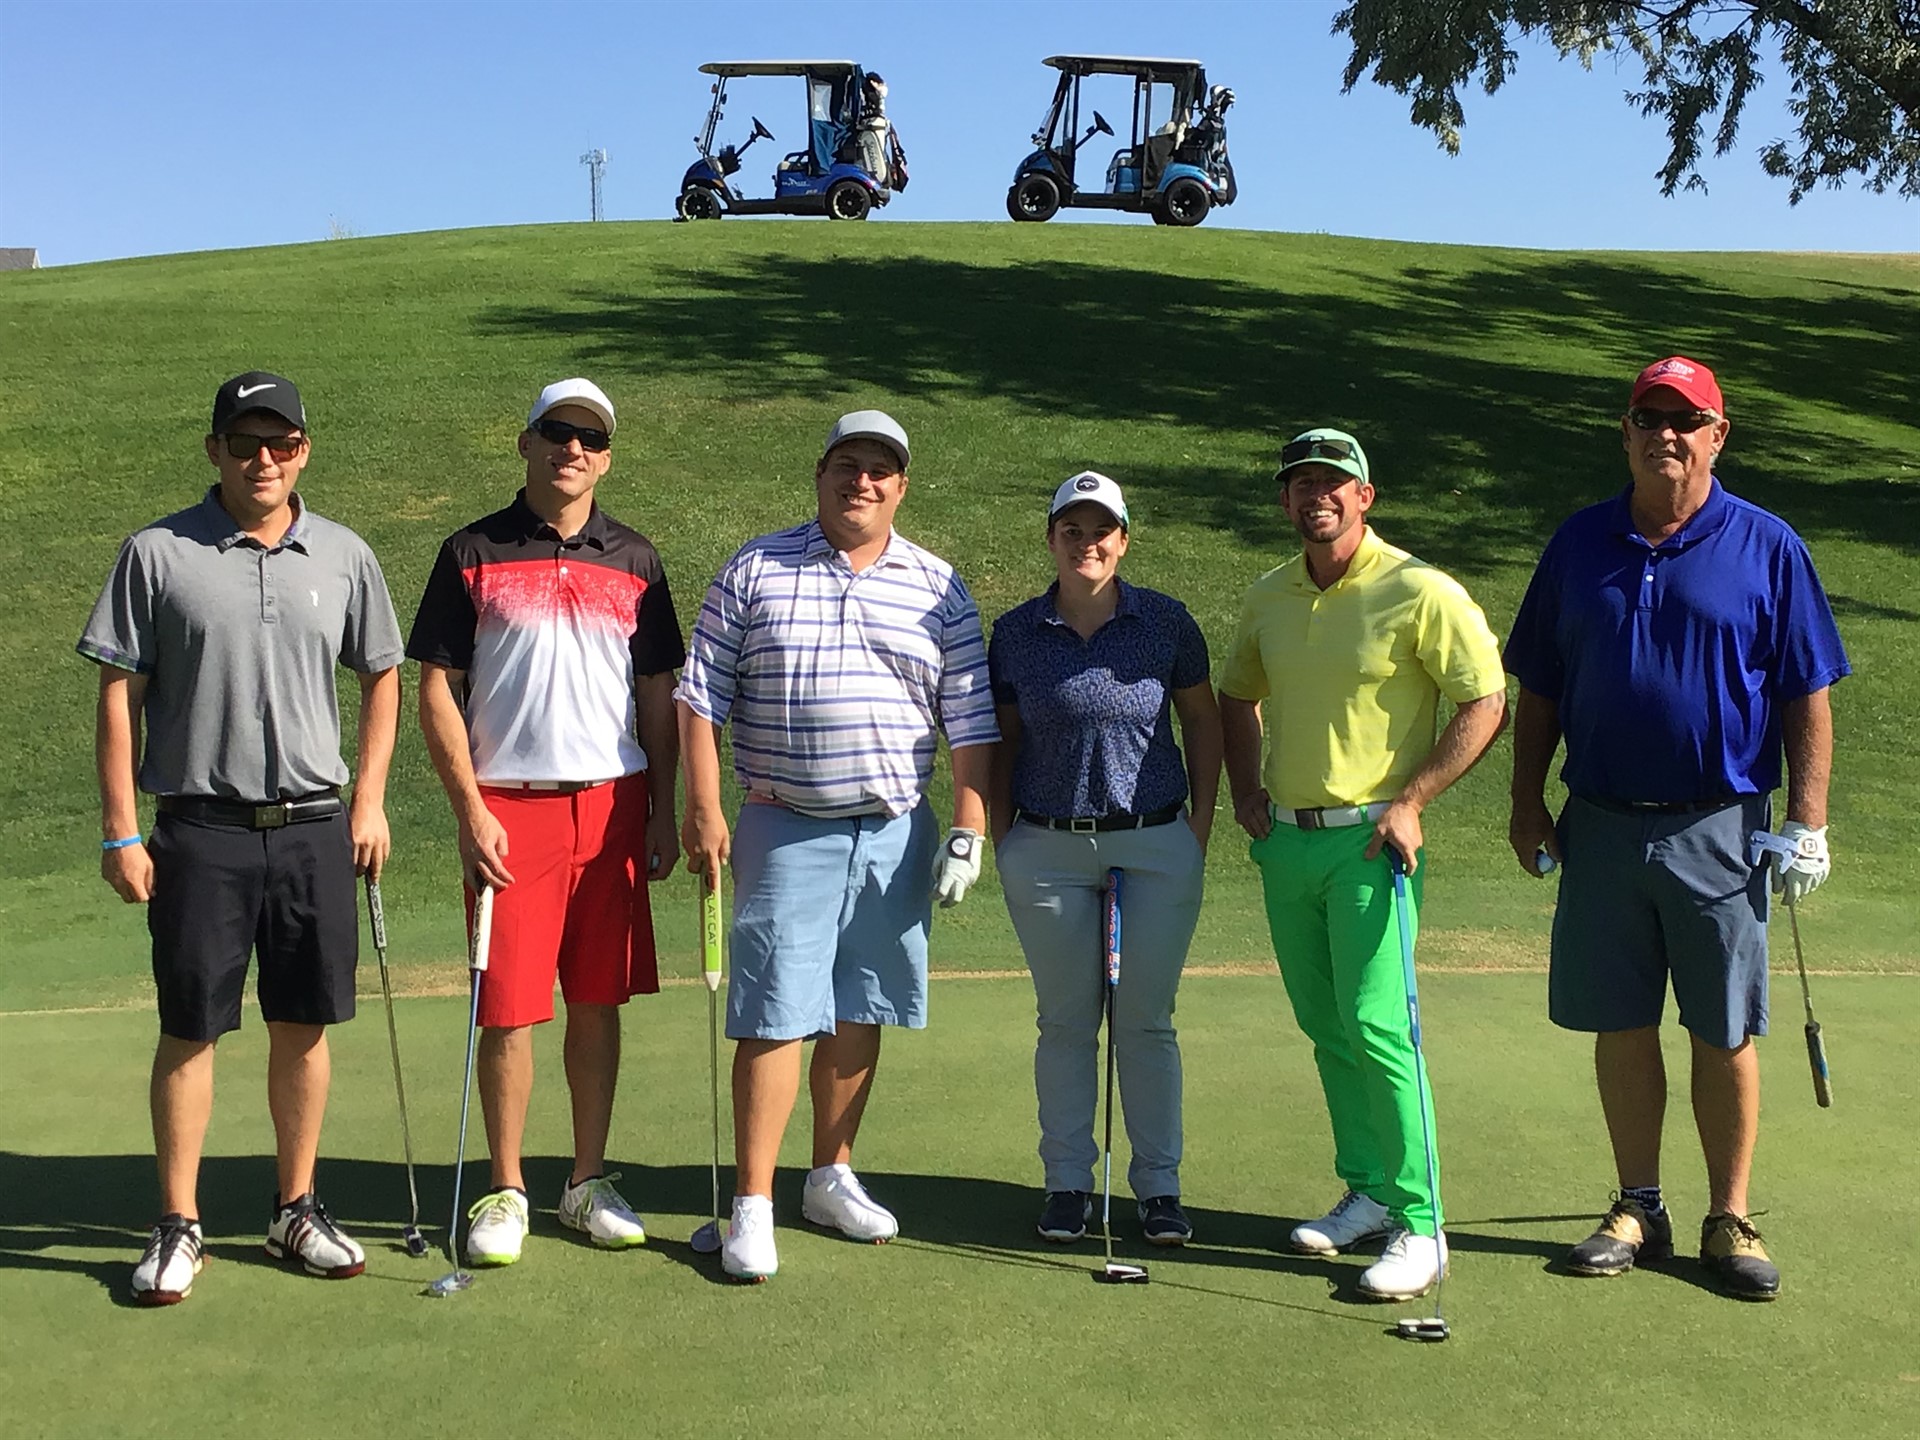 The Foundation's 27th Annual Golf Scramble